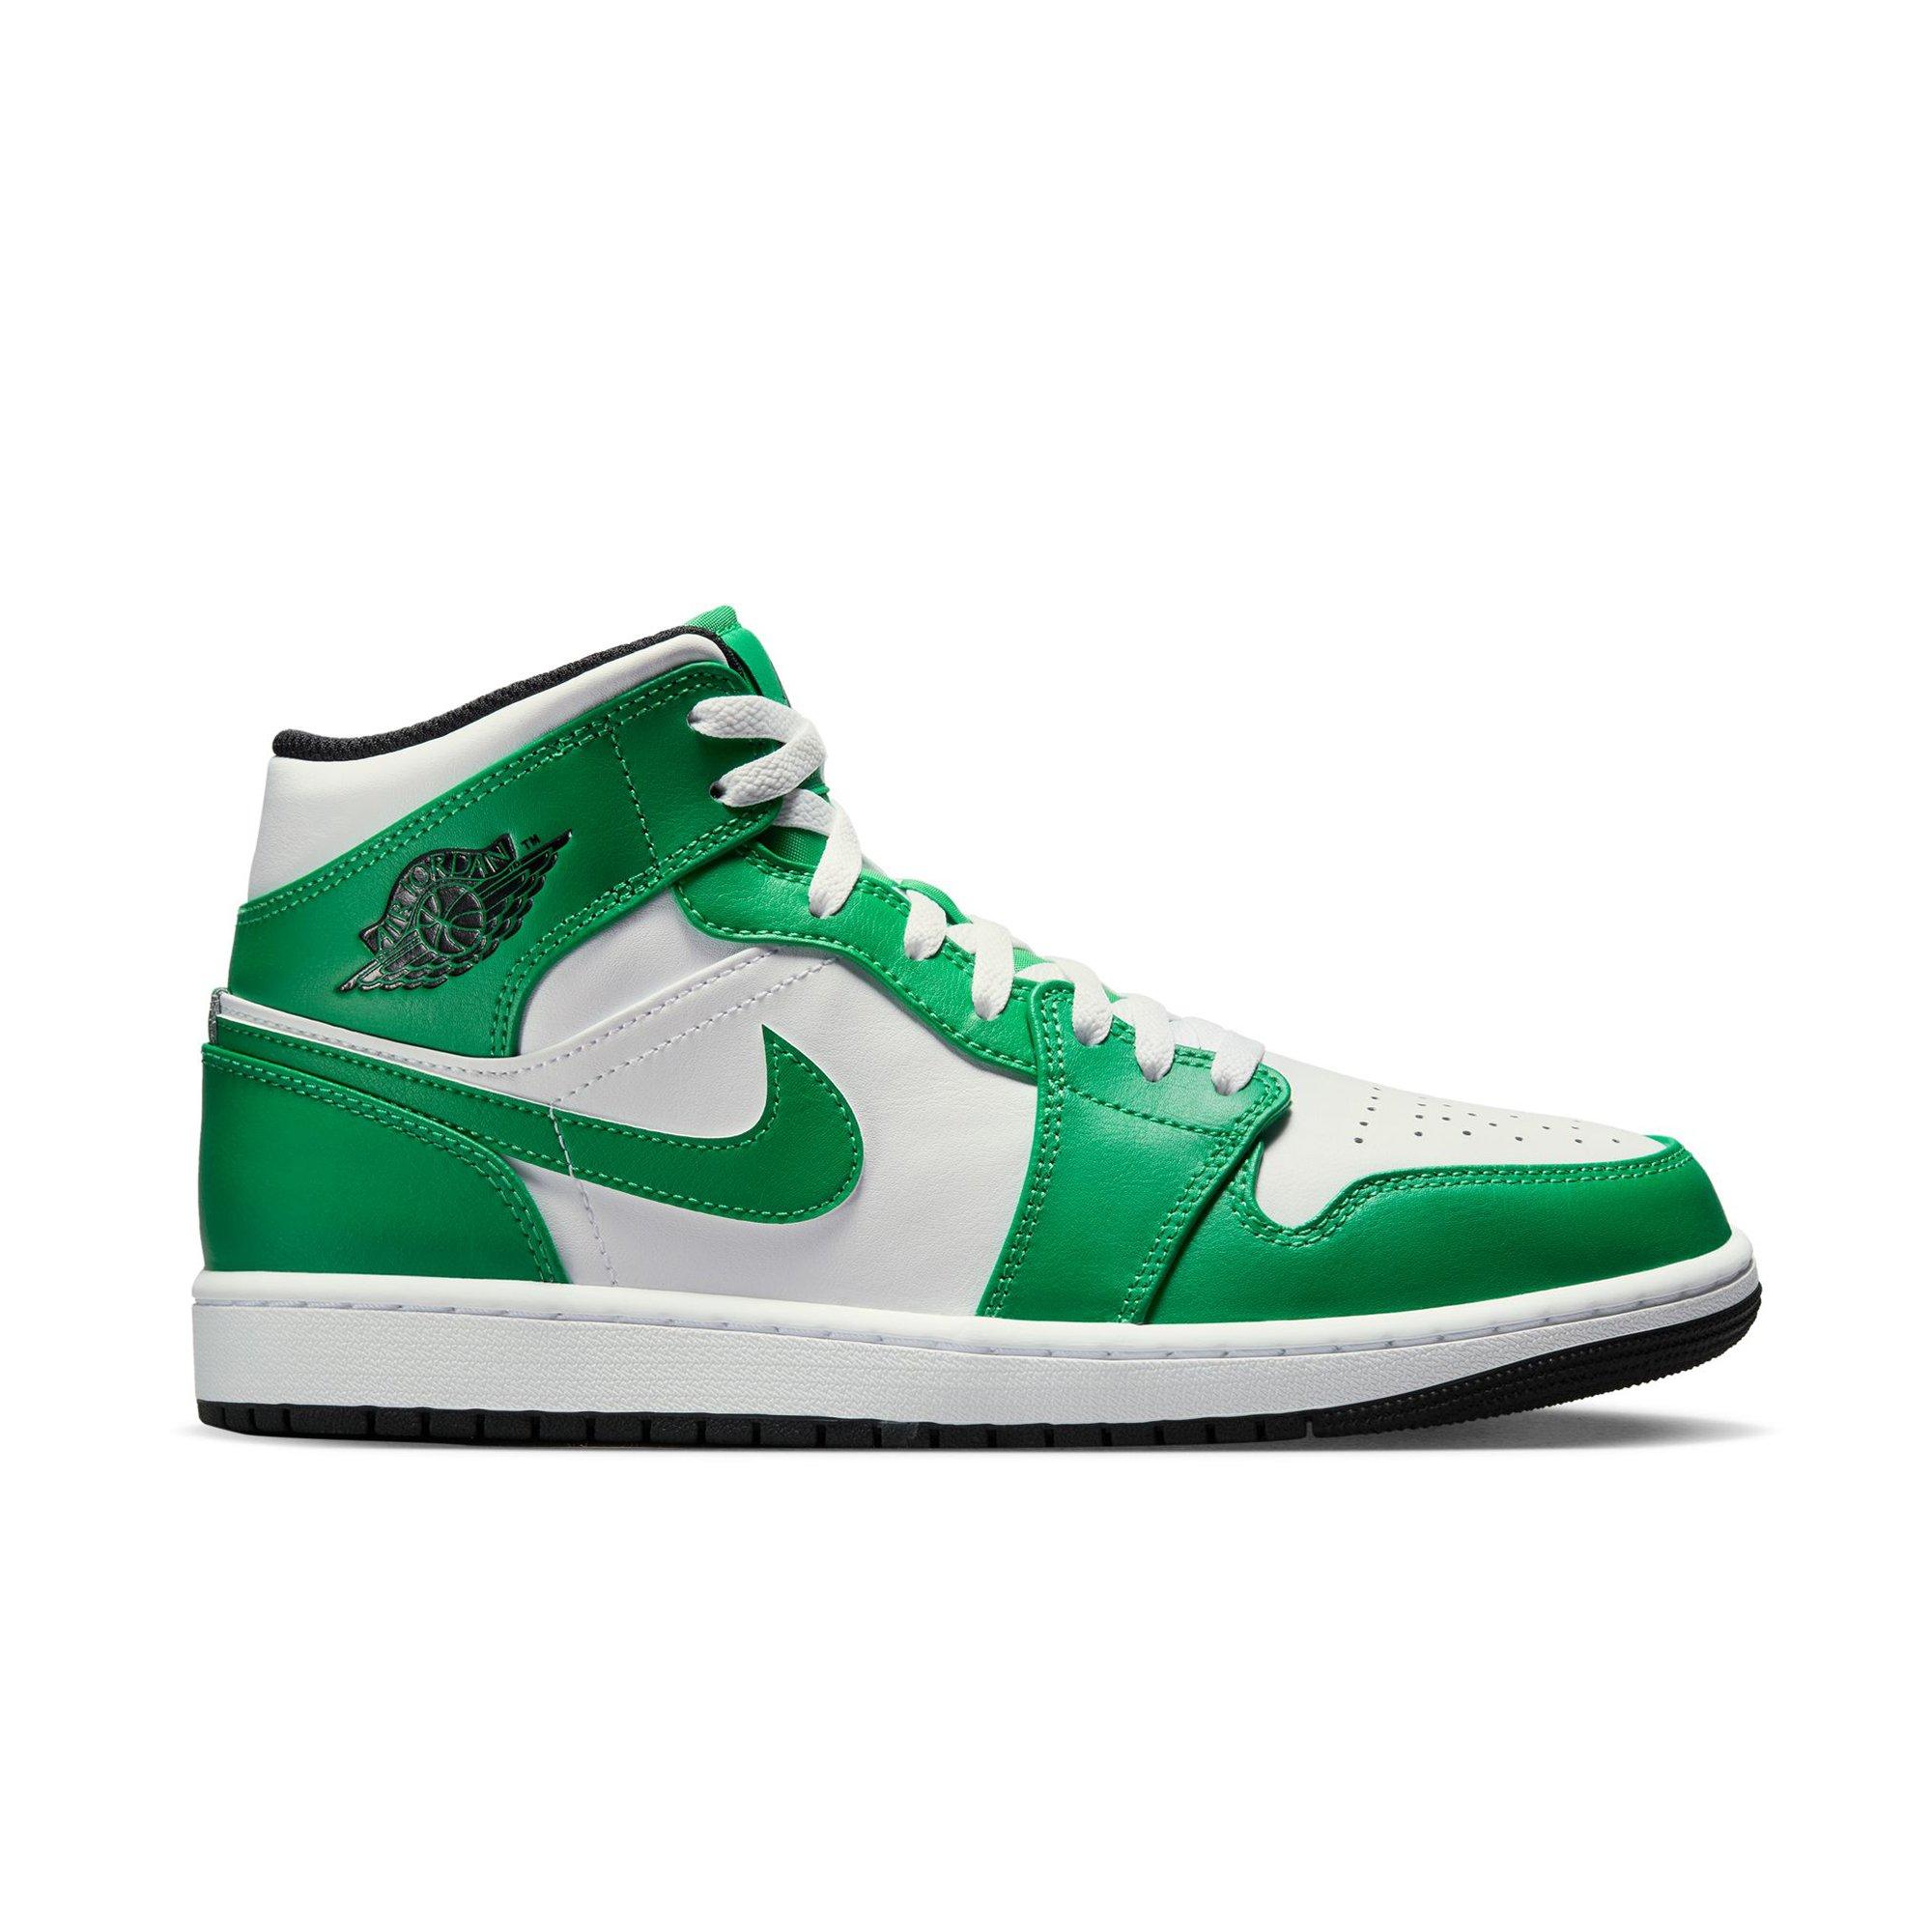 green jordan shoes for men